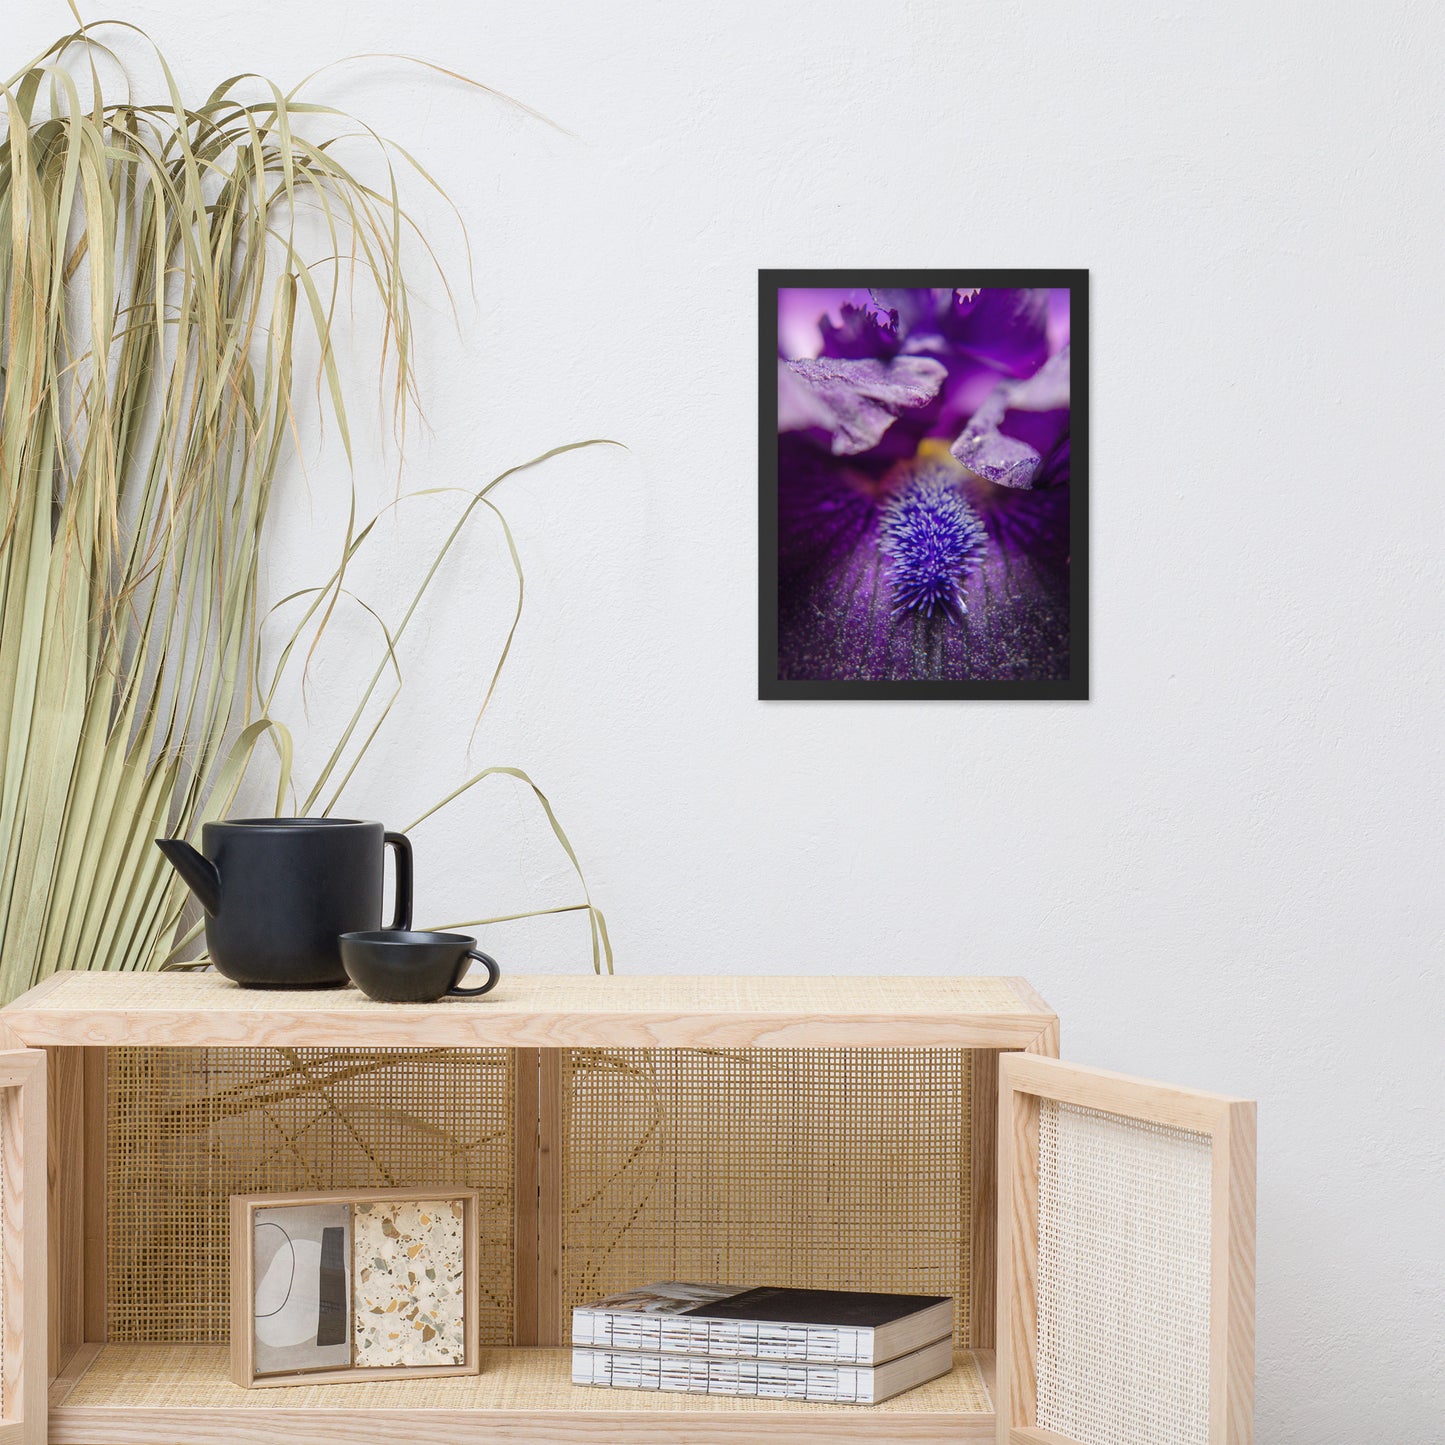 Stigma of Iris Floral Nature Photo Framed Wall Art Print